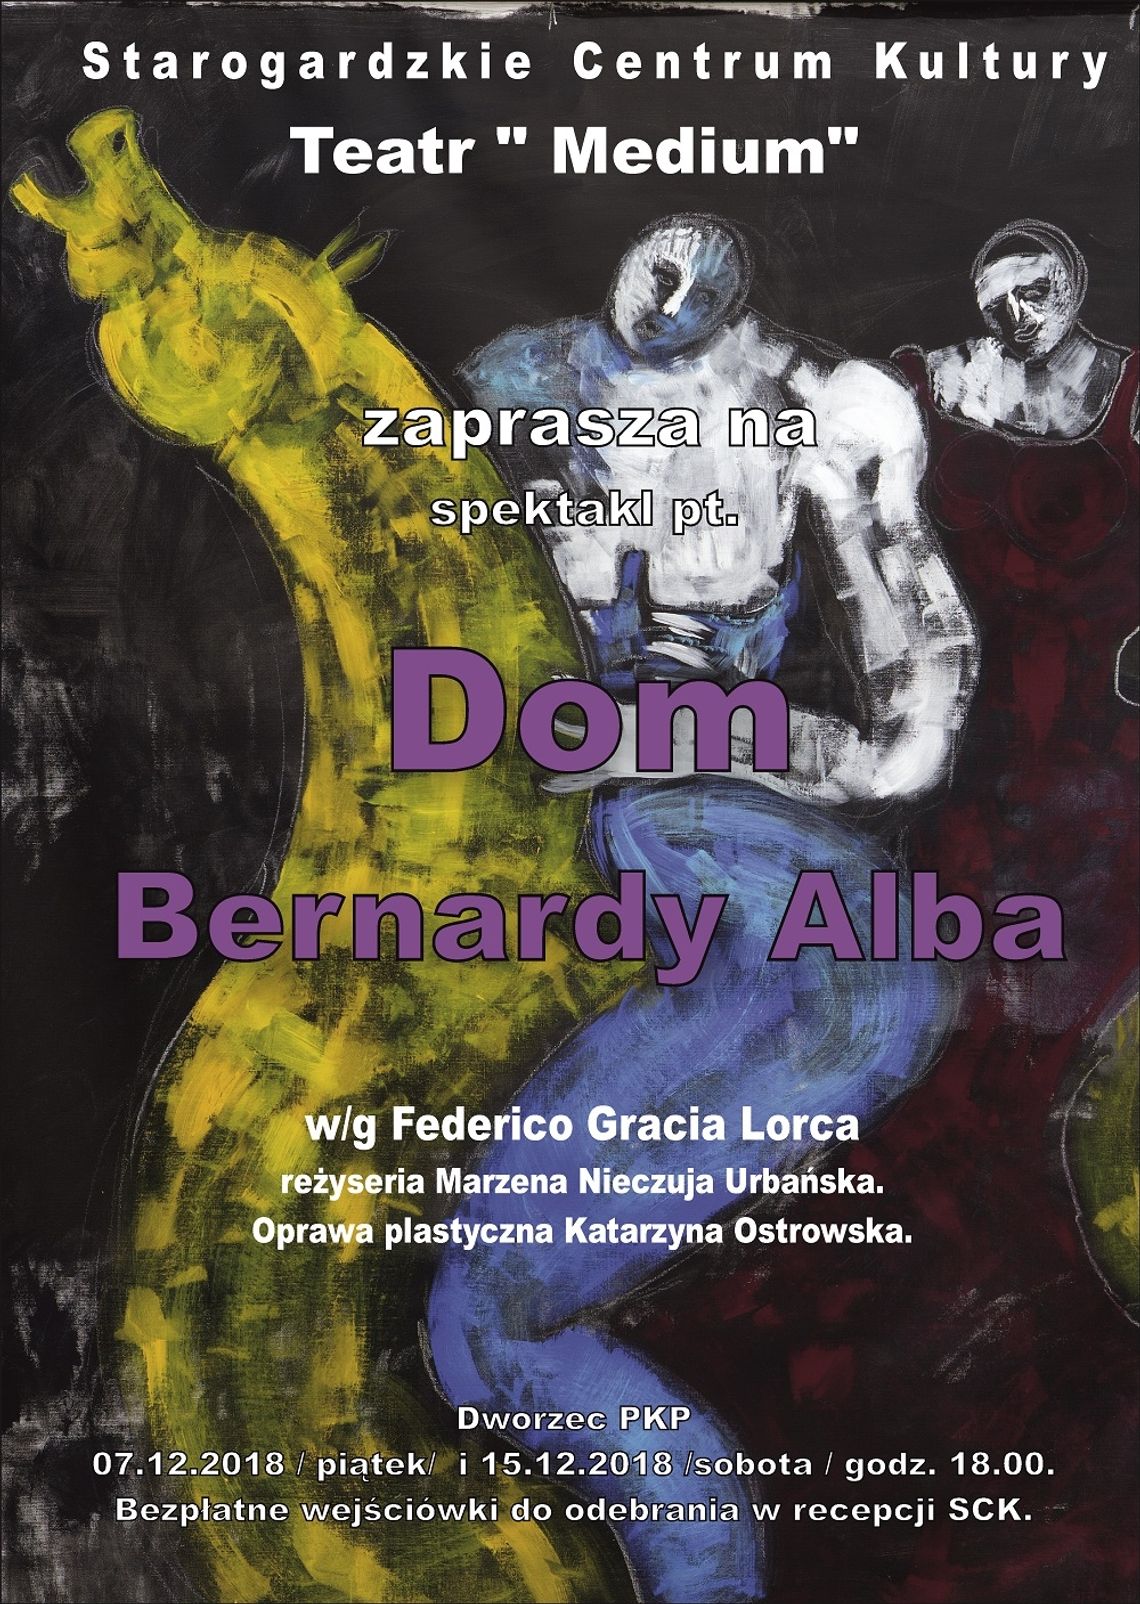 Spektakl pt. "Dom Bernardy Alba" na dworcu PKP.